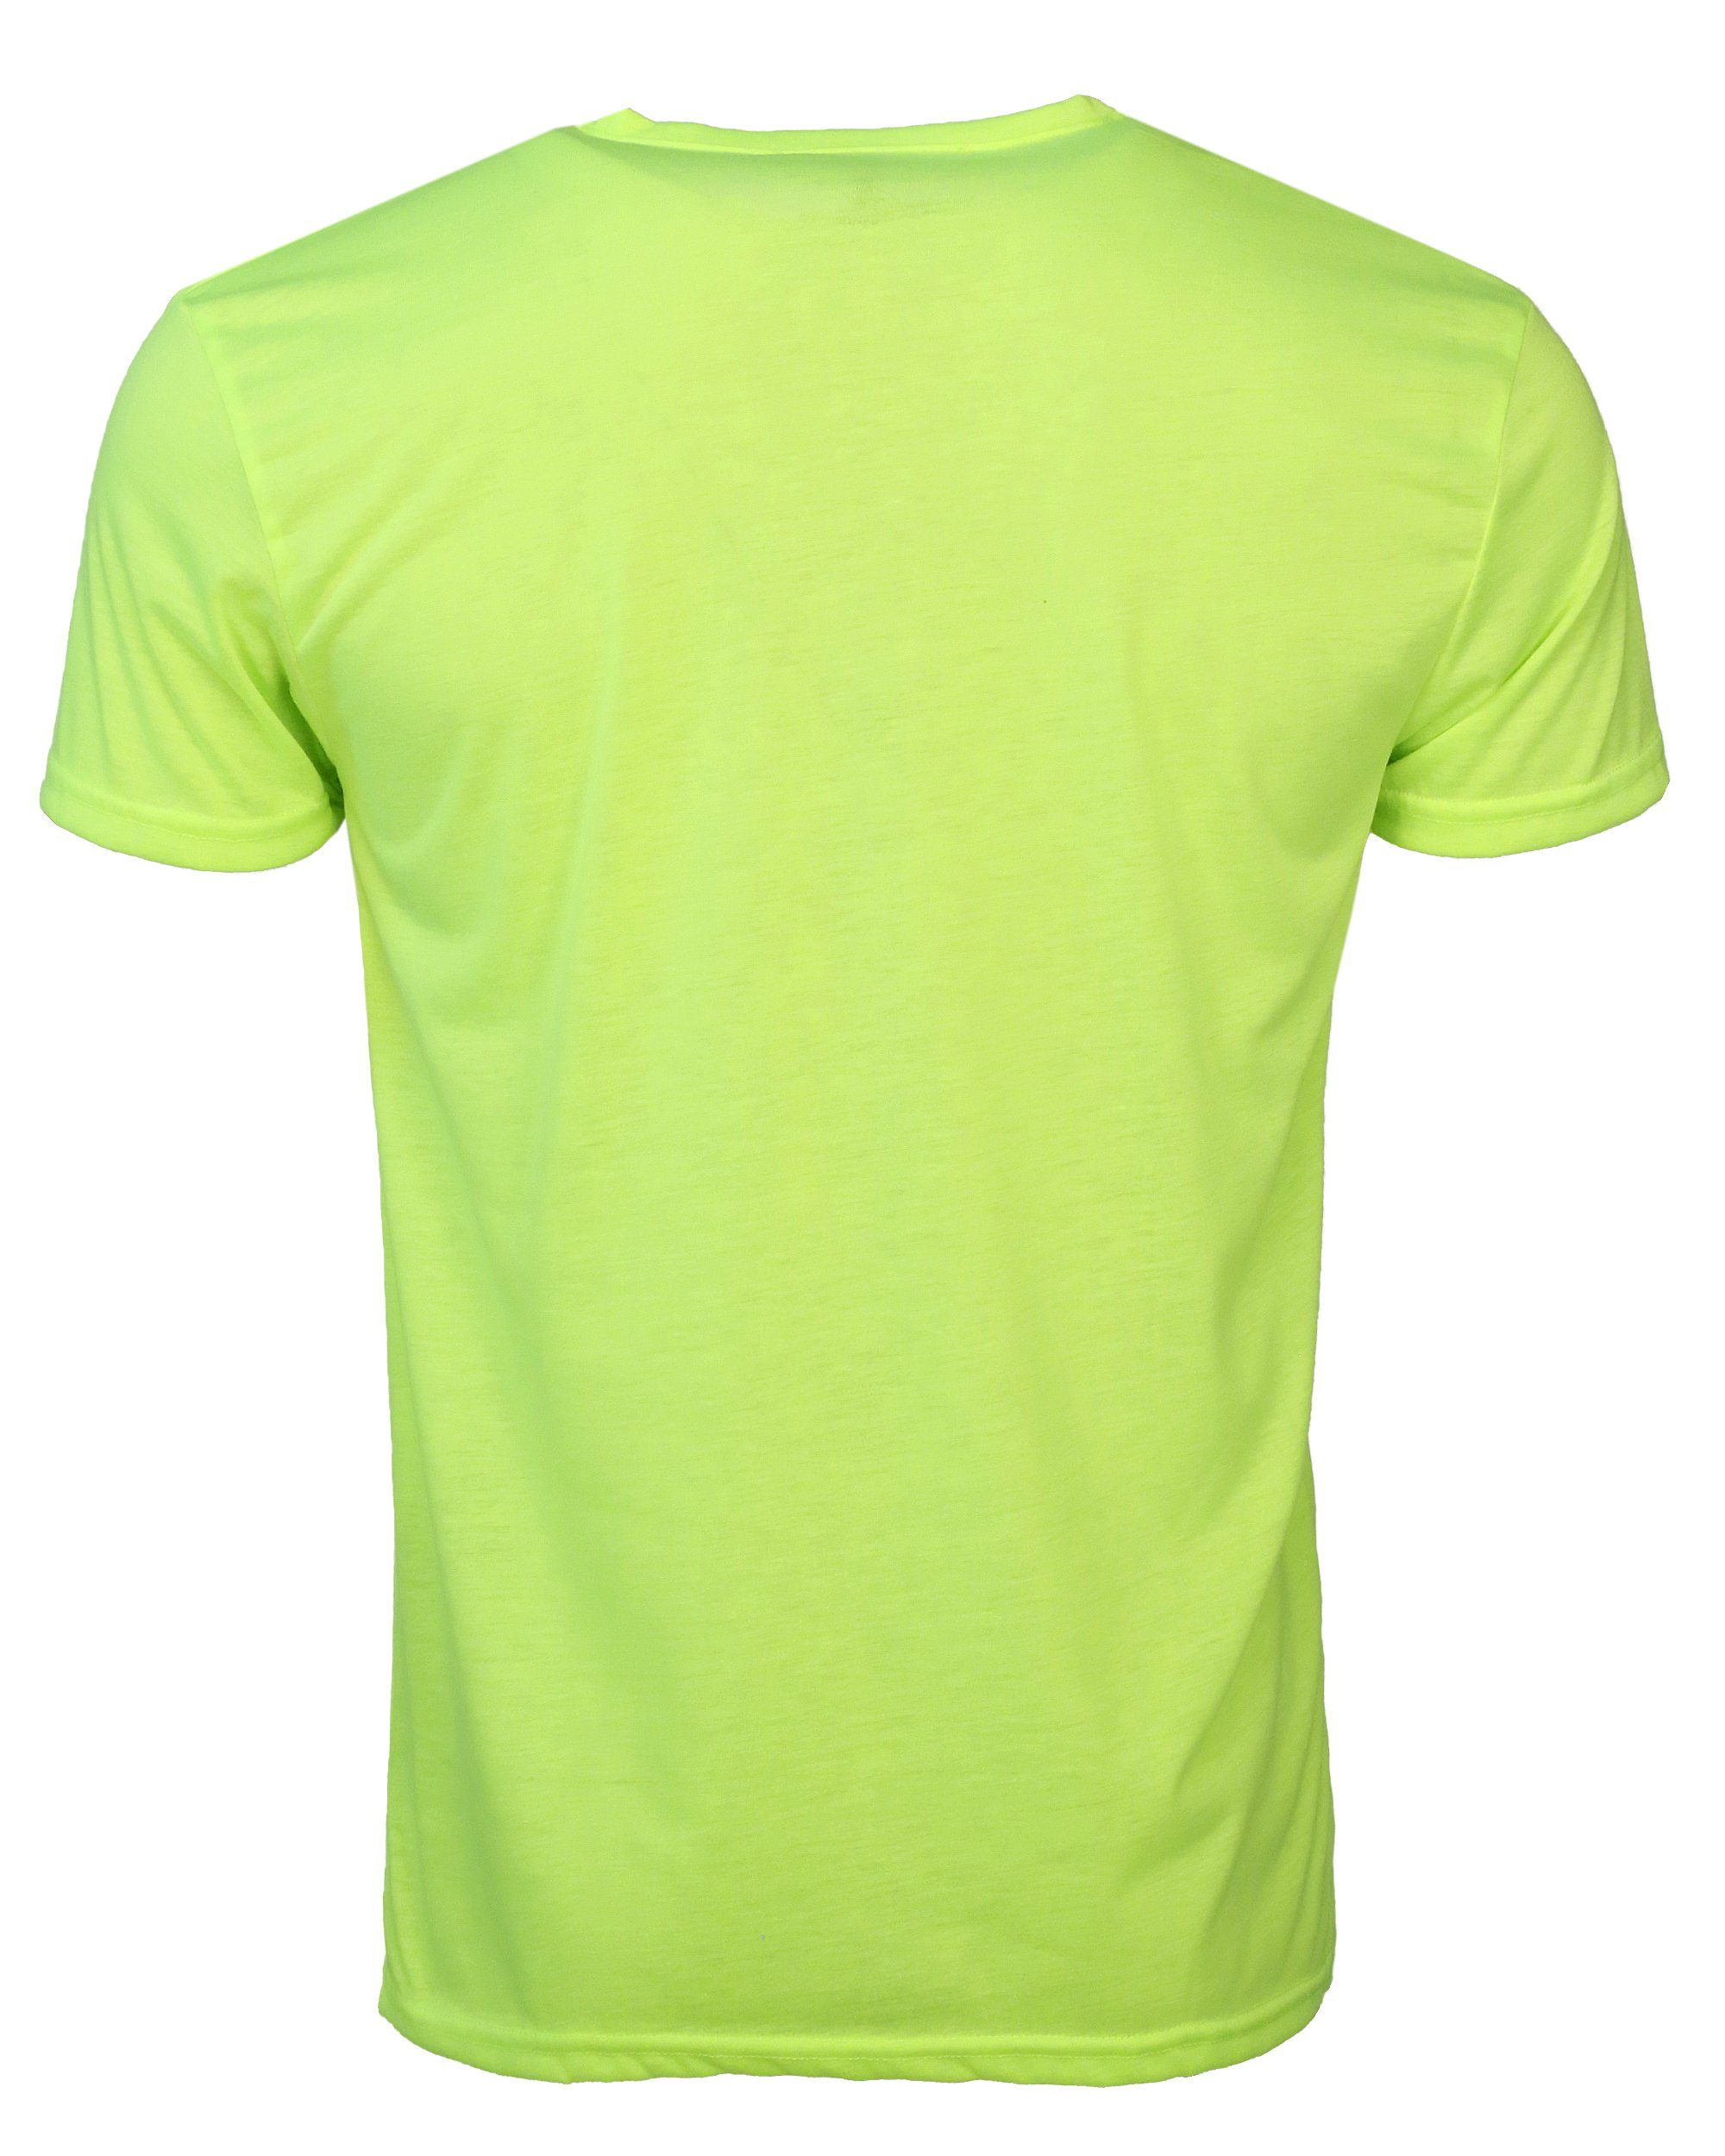 TOP GUN T-Shirt Radiate TG20192062 yellow